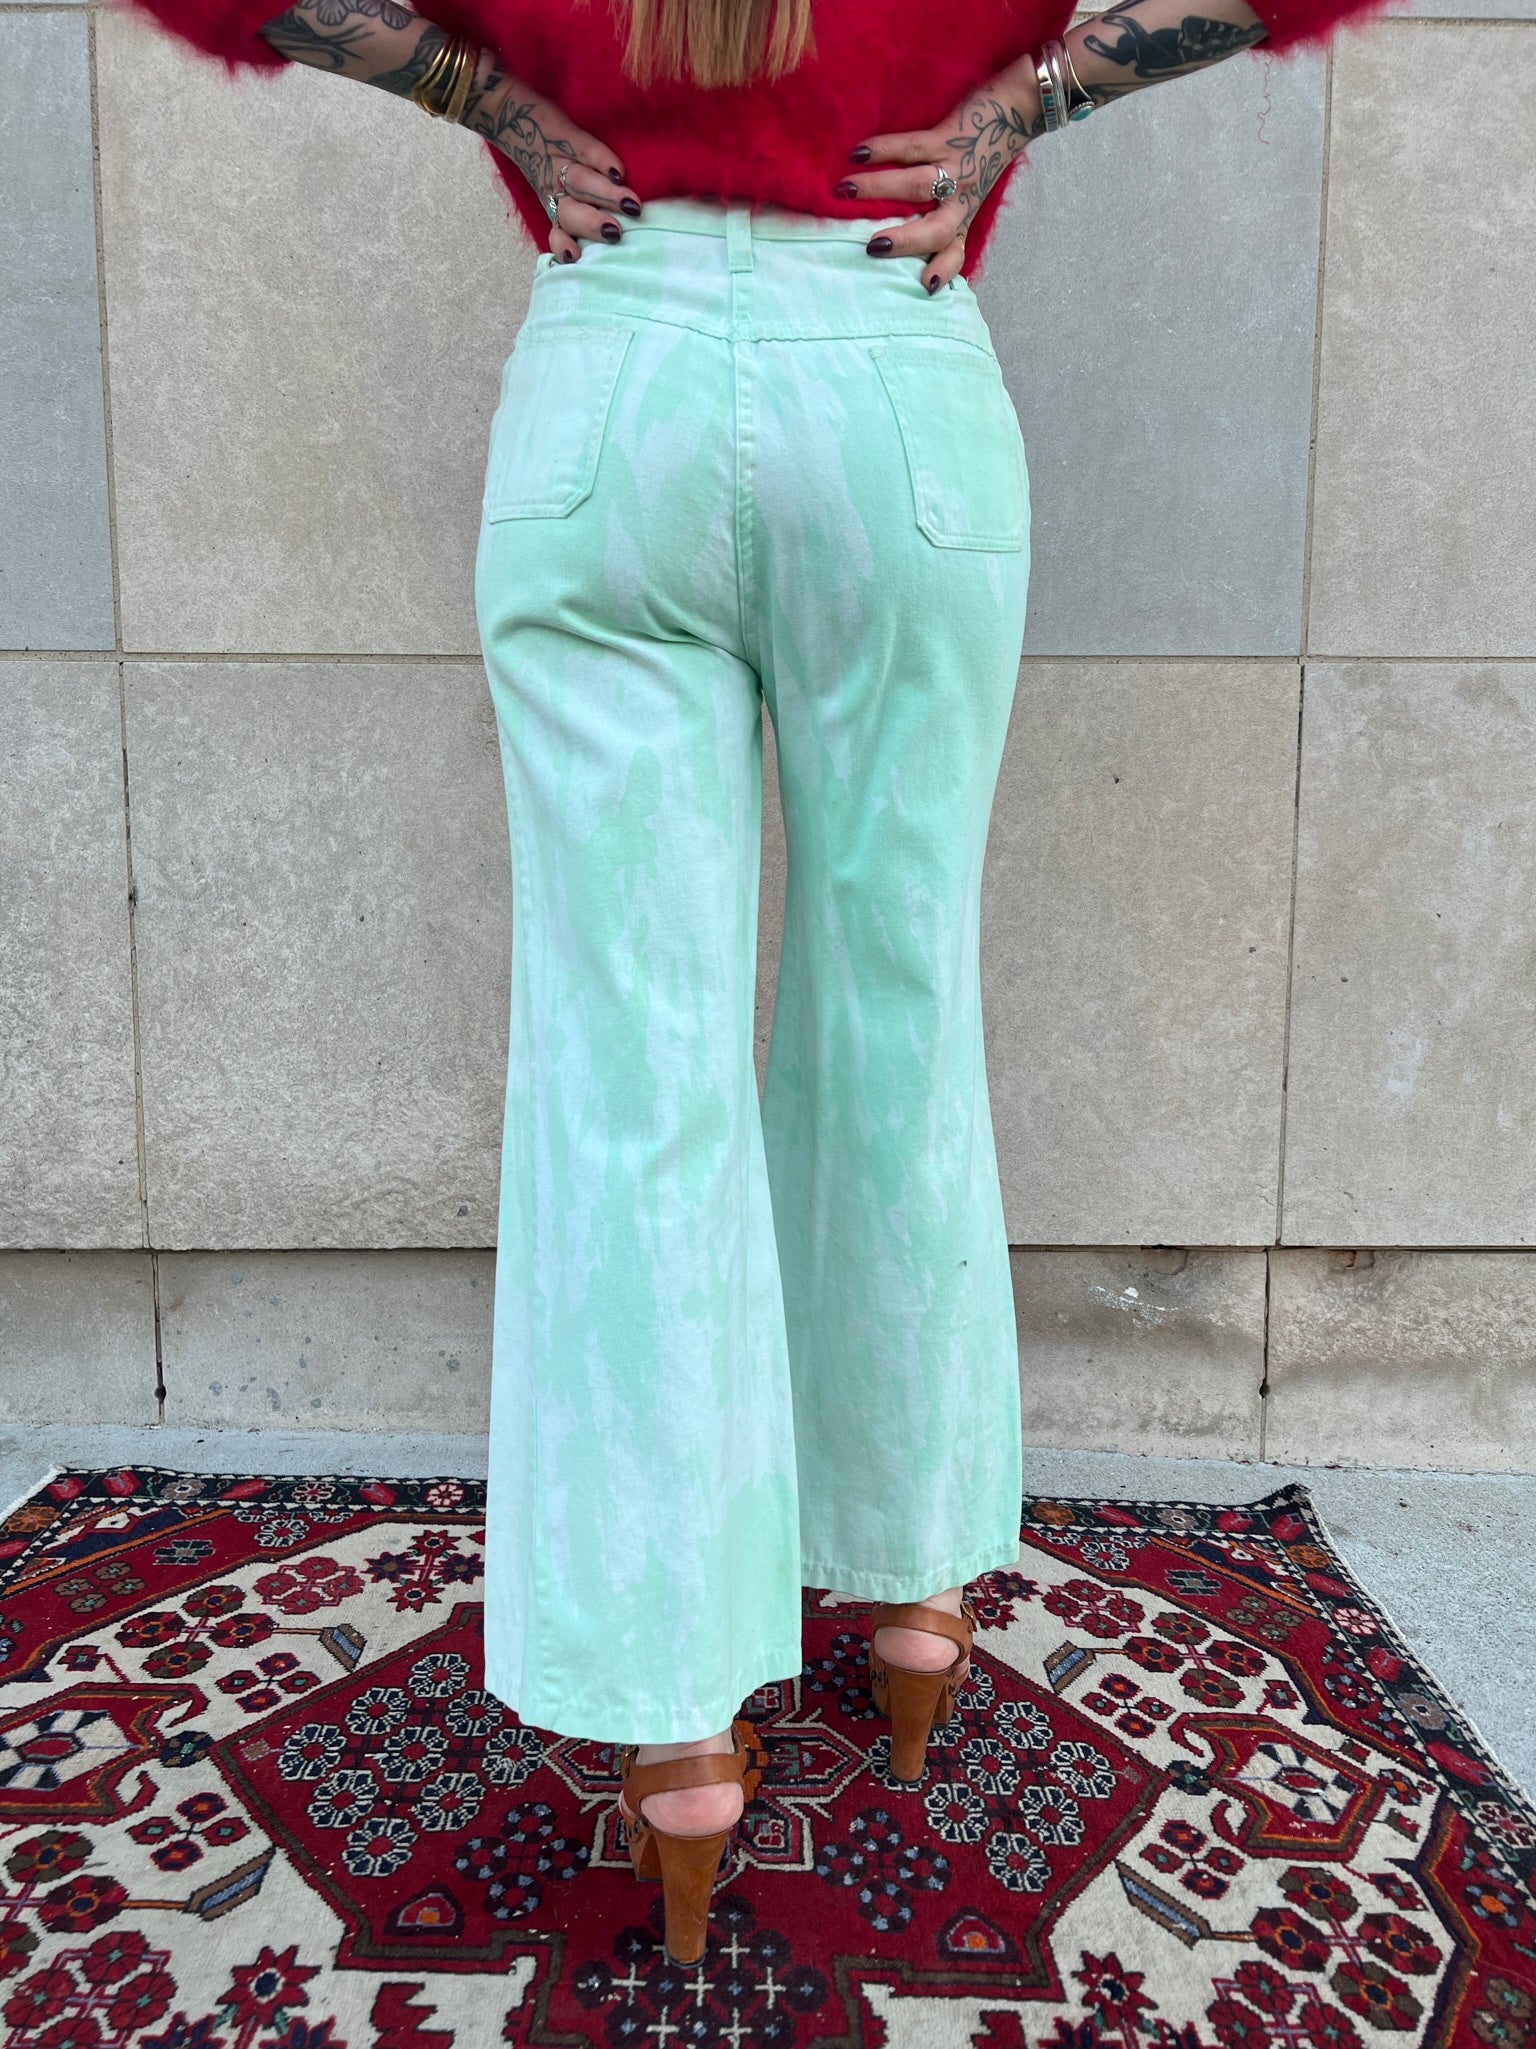 Lovskoo Men's Bell Bottom Flares Pants Slim 60S 70S Vintage Outfits Bootcut  Trousers Olive Green 